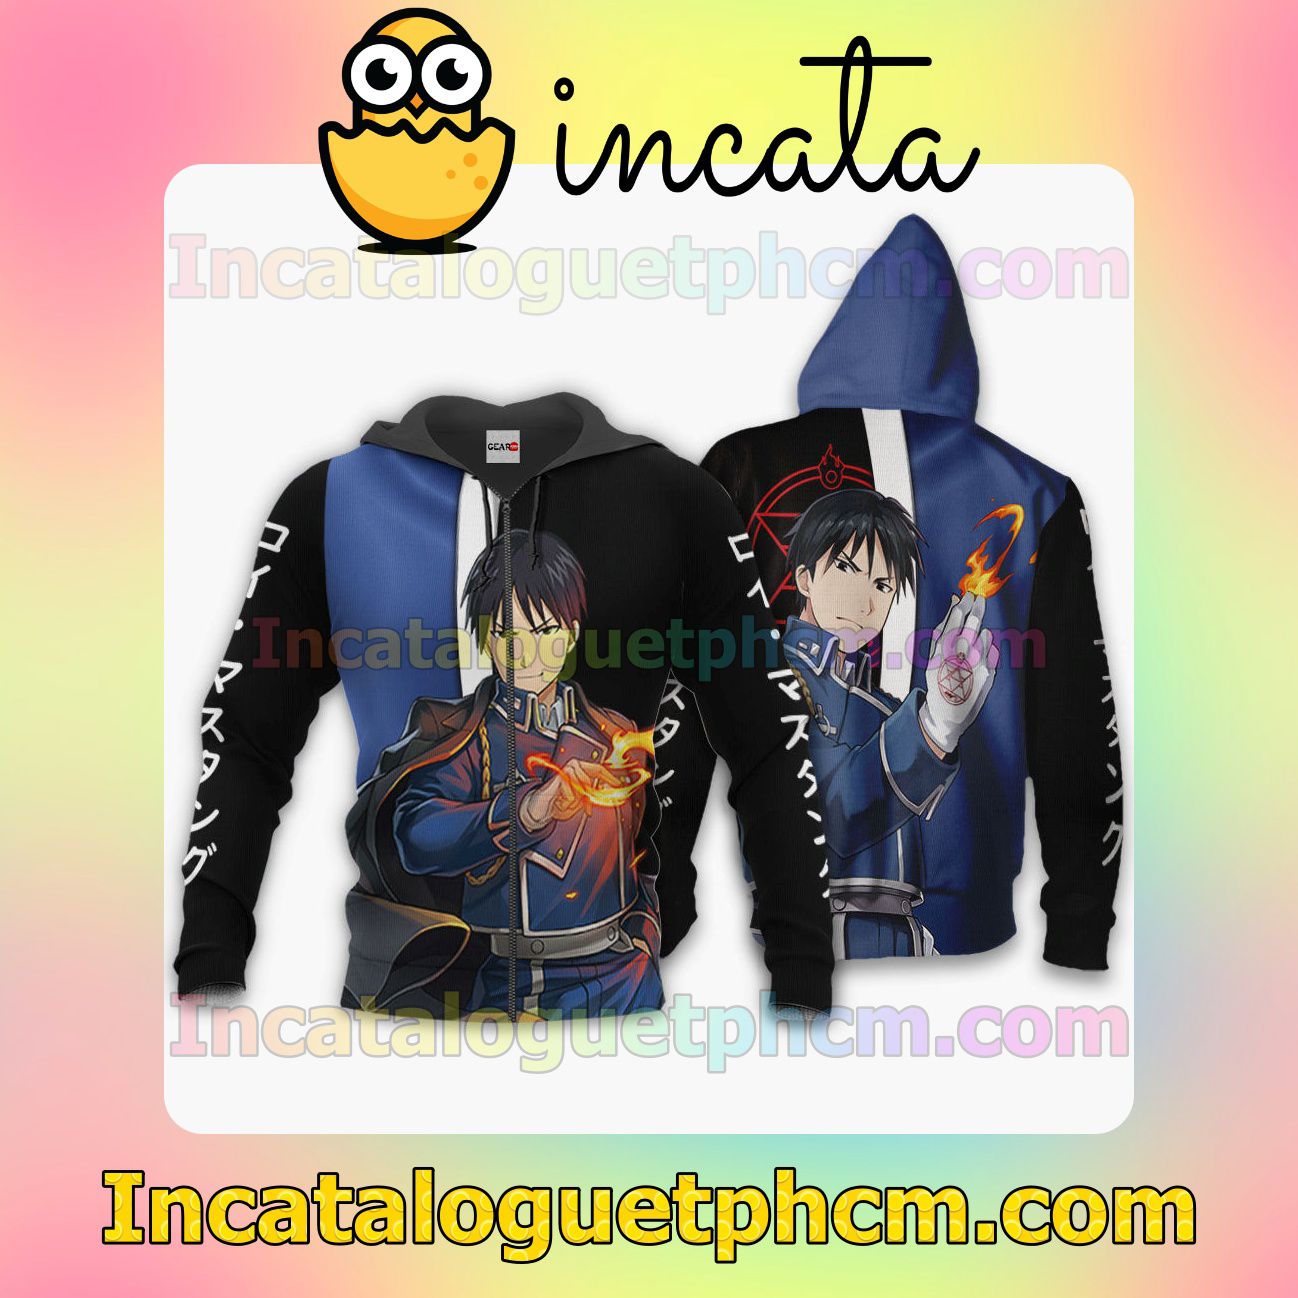 Mustang Roy Fullmetal Alchemist Anime Clothing Merch Zip Hoodie Jacket Shirts